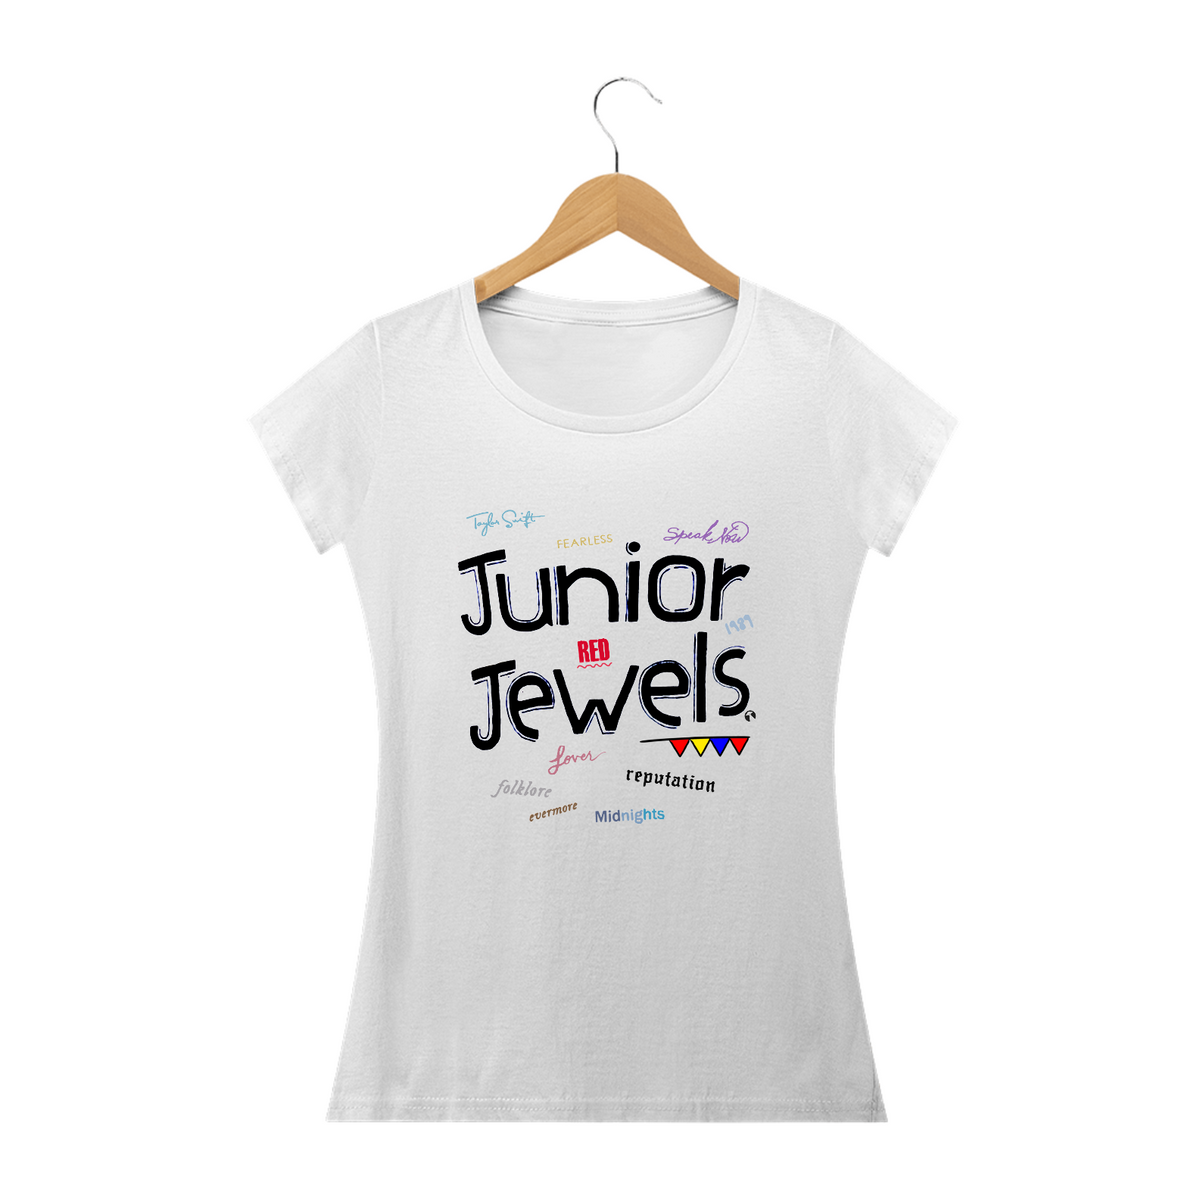 Nome do produto: babylook - Junior Jewels Taylor Swift